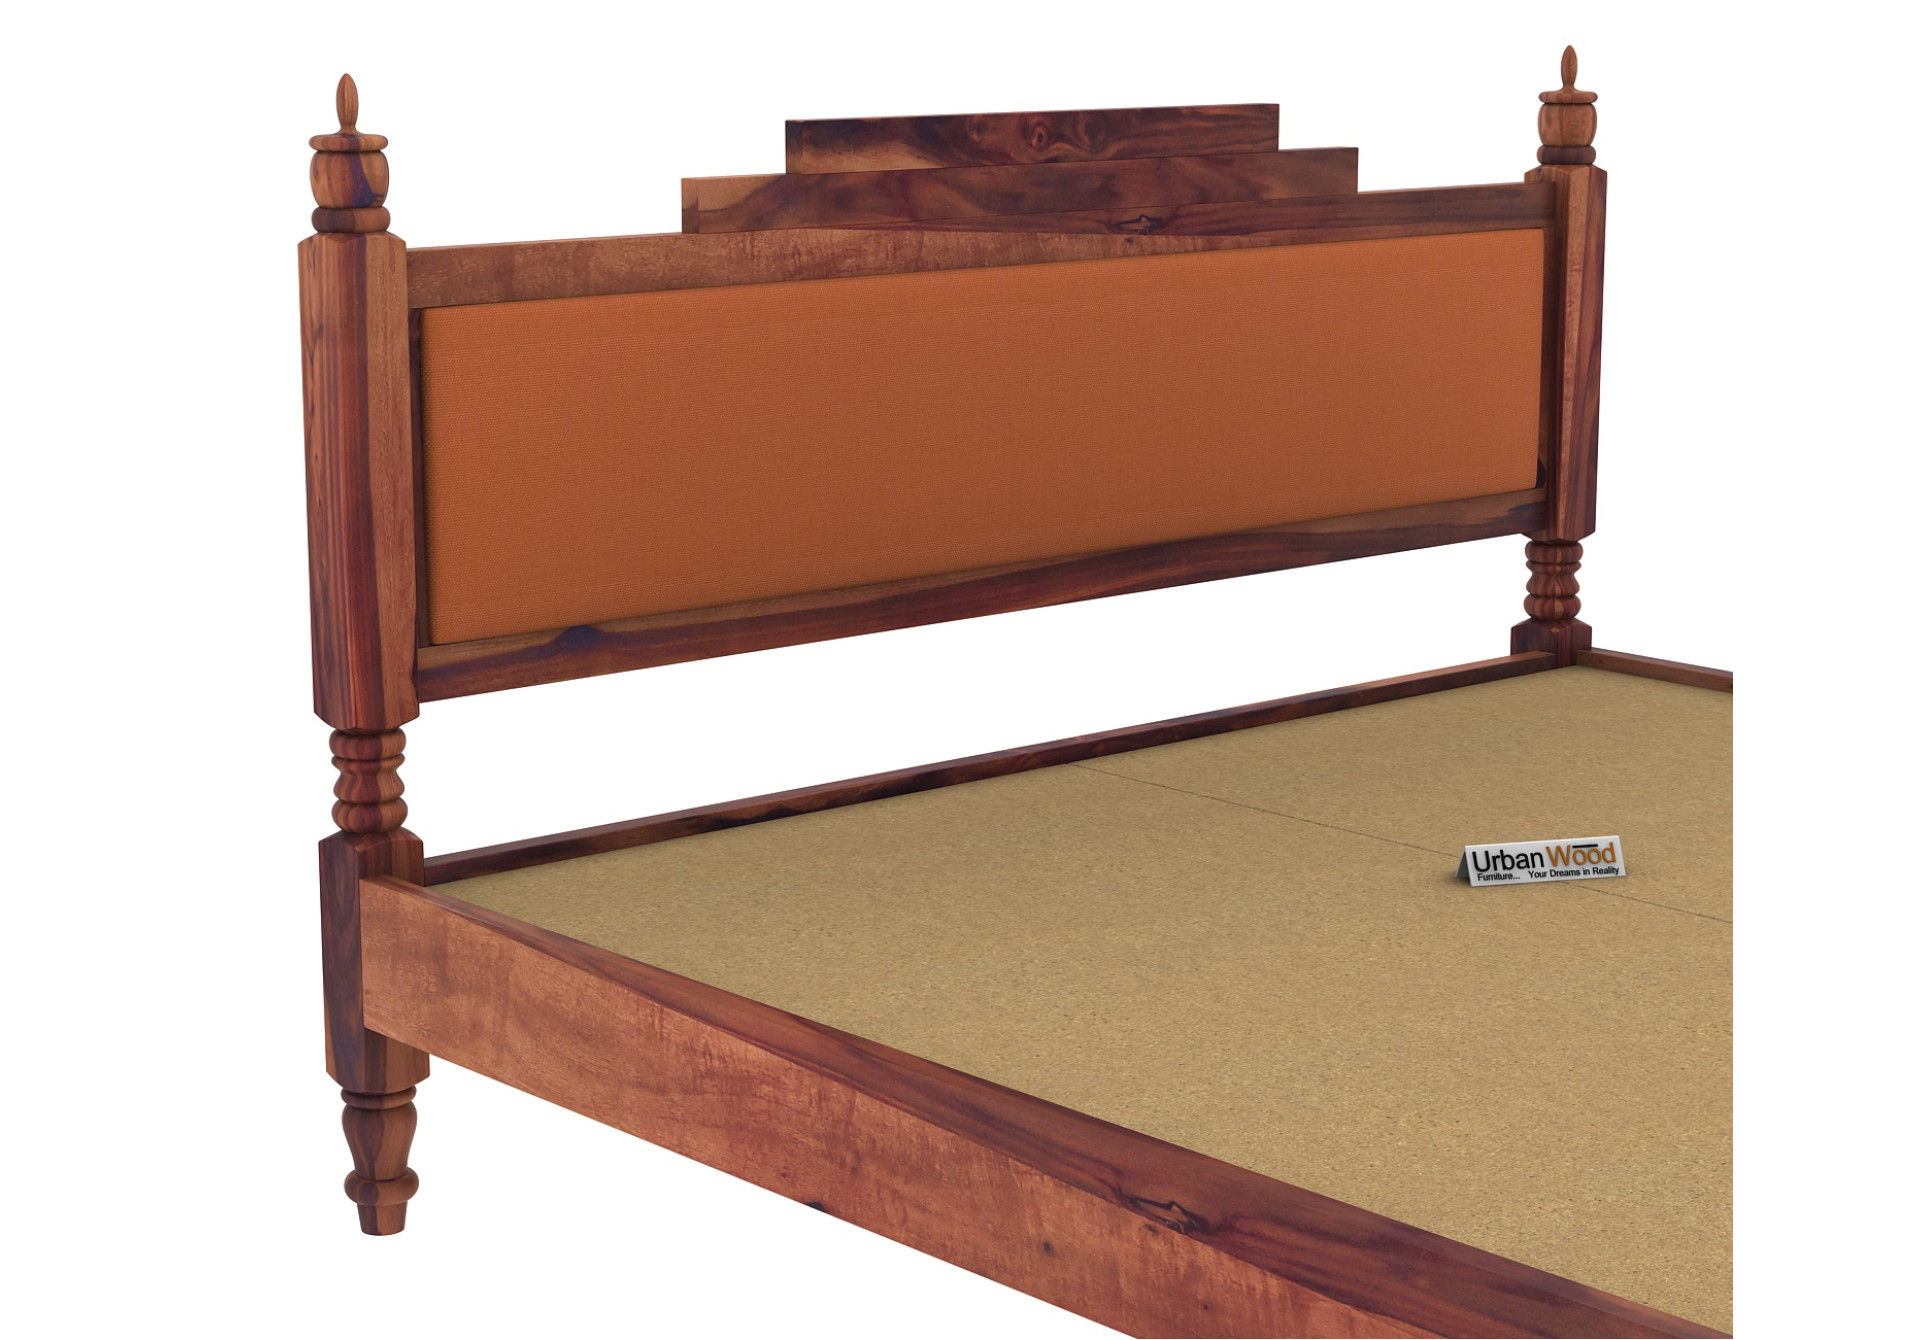 Jodhpuri Without Storage Bed (Queen Size, Teak Finish)